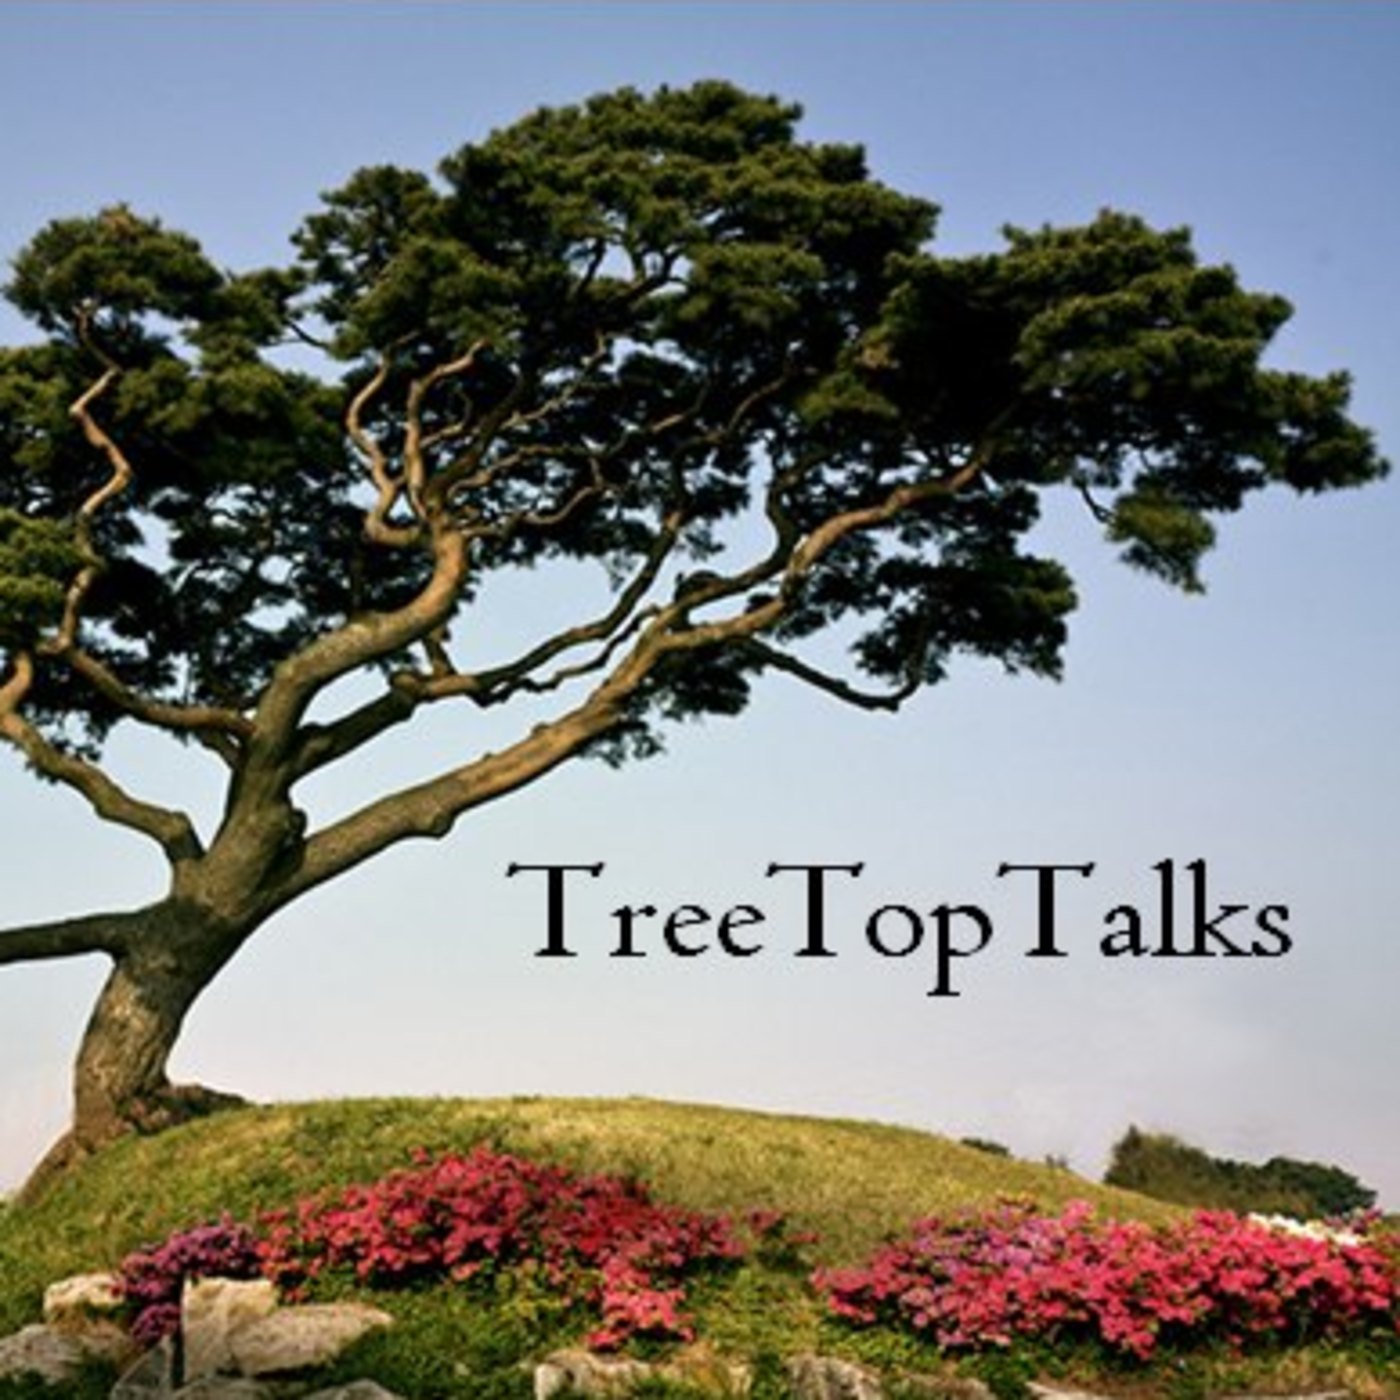 TreeTop Talks